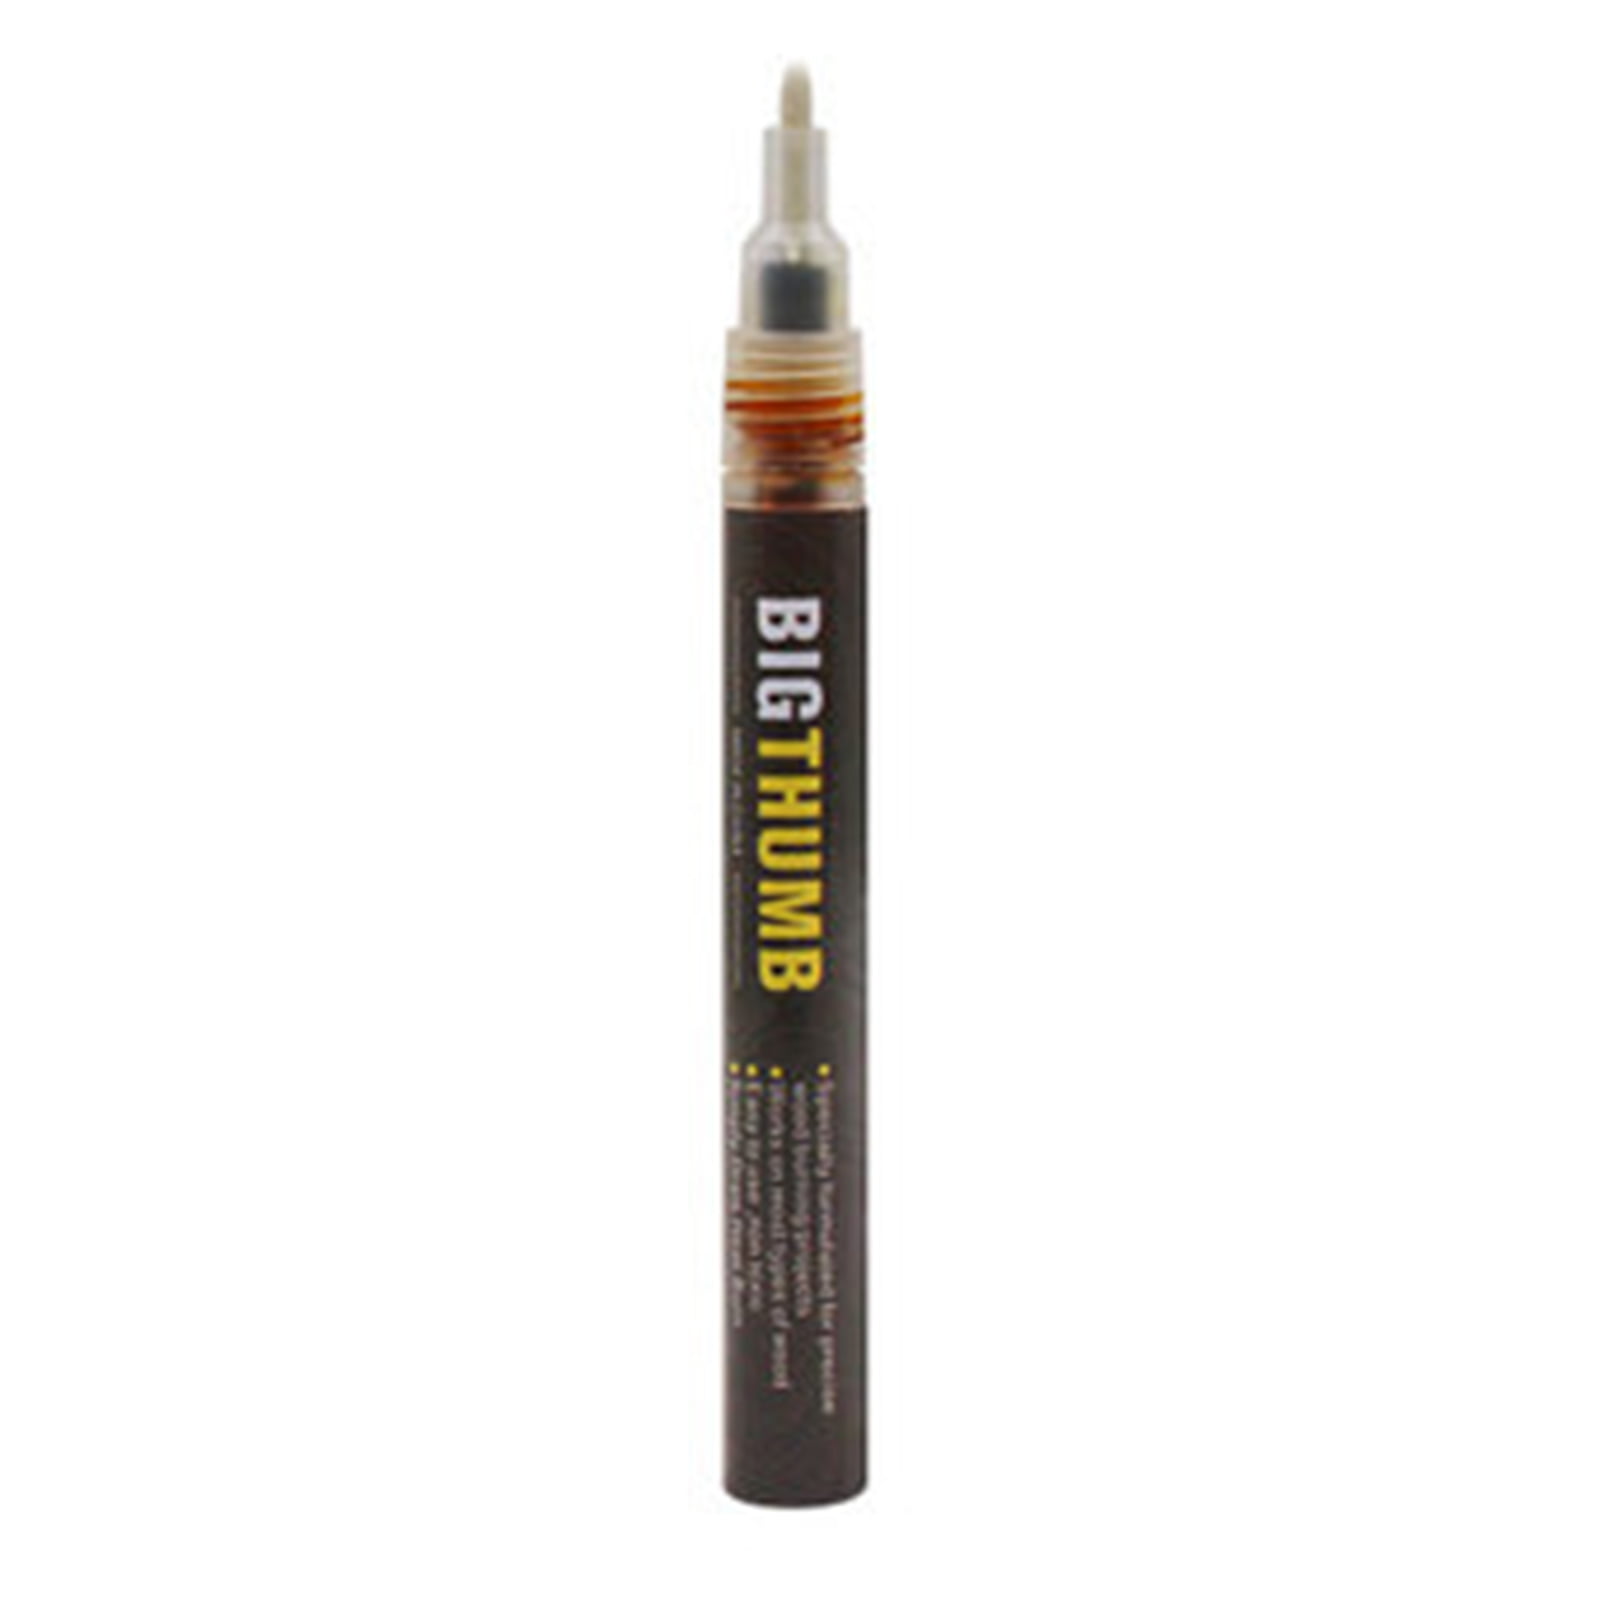  DHliIQQ Scorch Pen Marker - Wood Burning Pen, Chemical